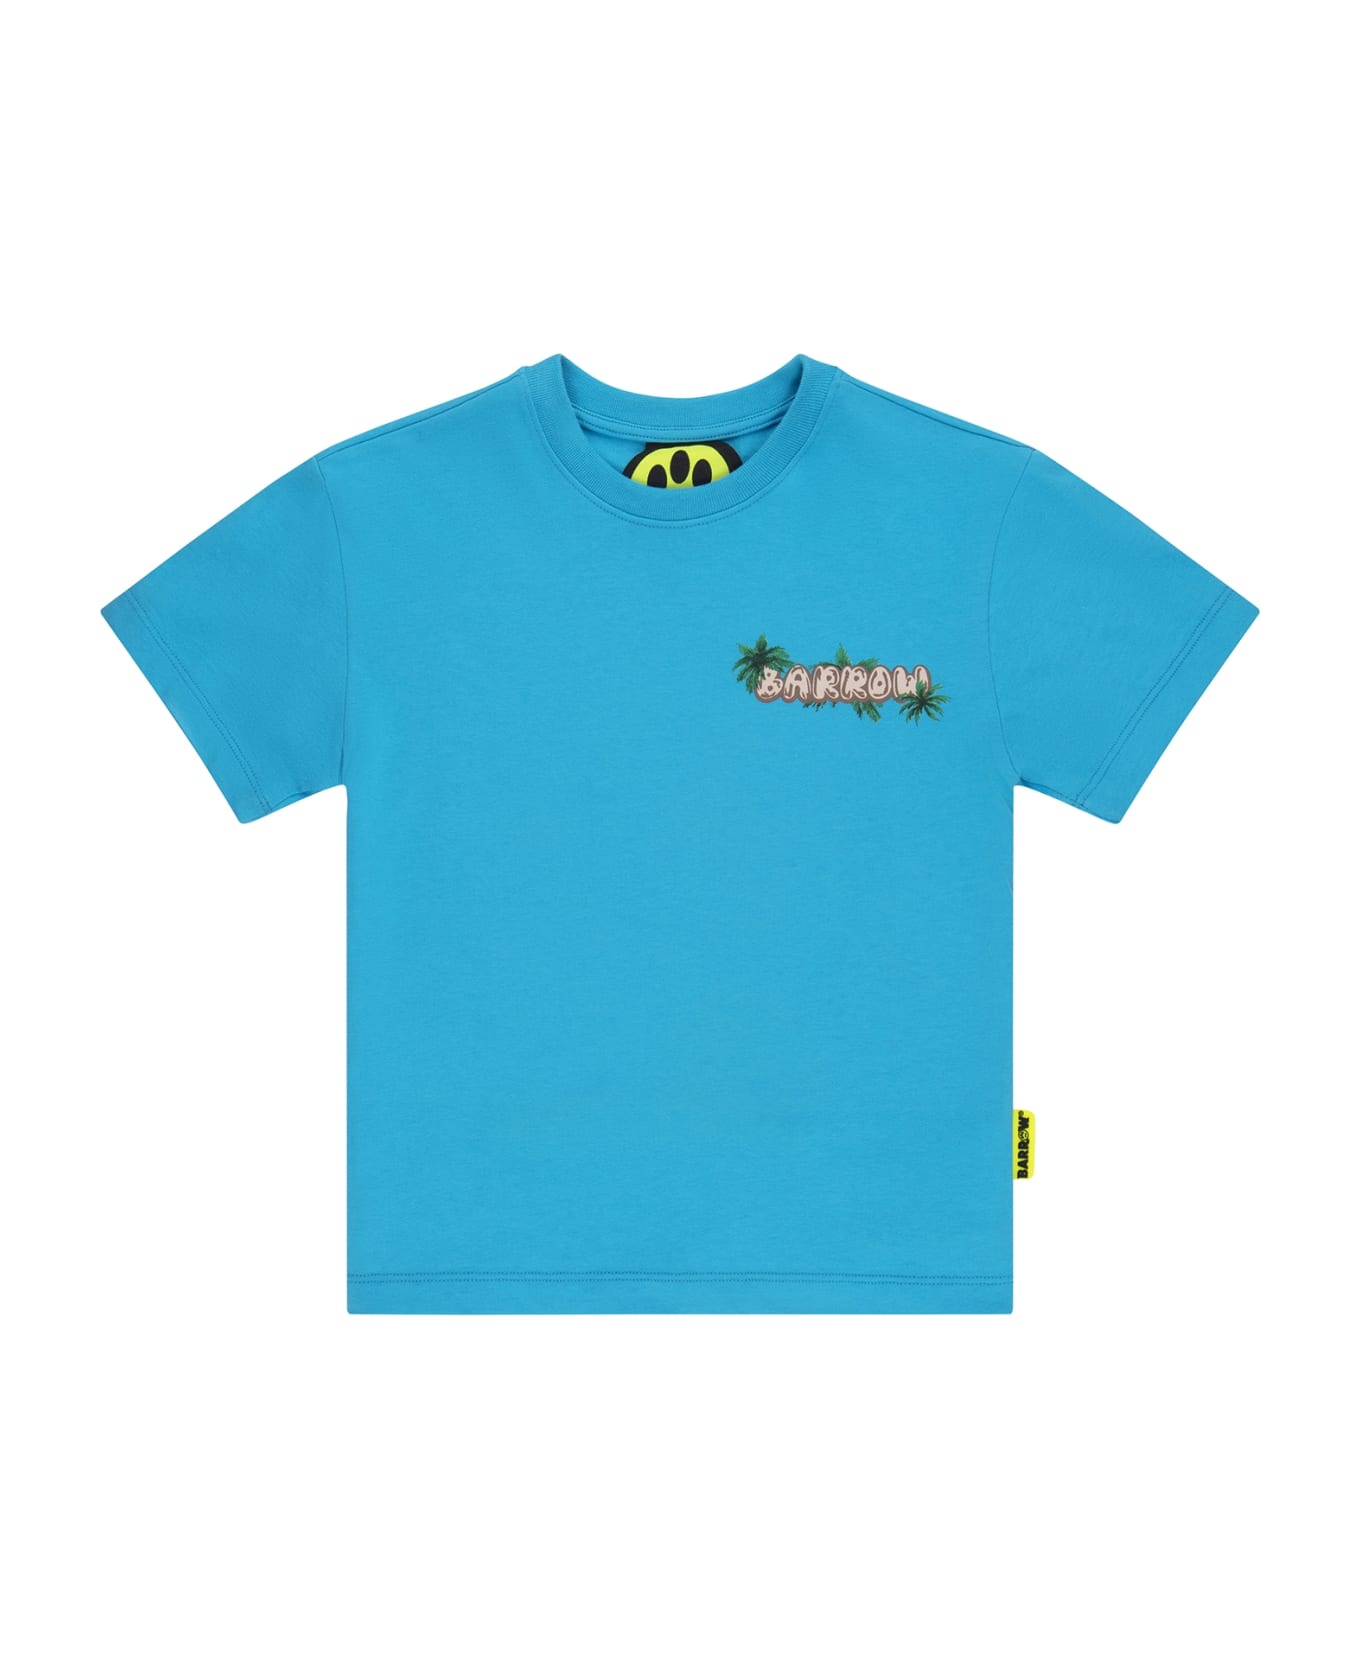 Barrow T-shirt With Print - Light blue